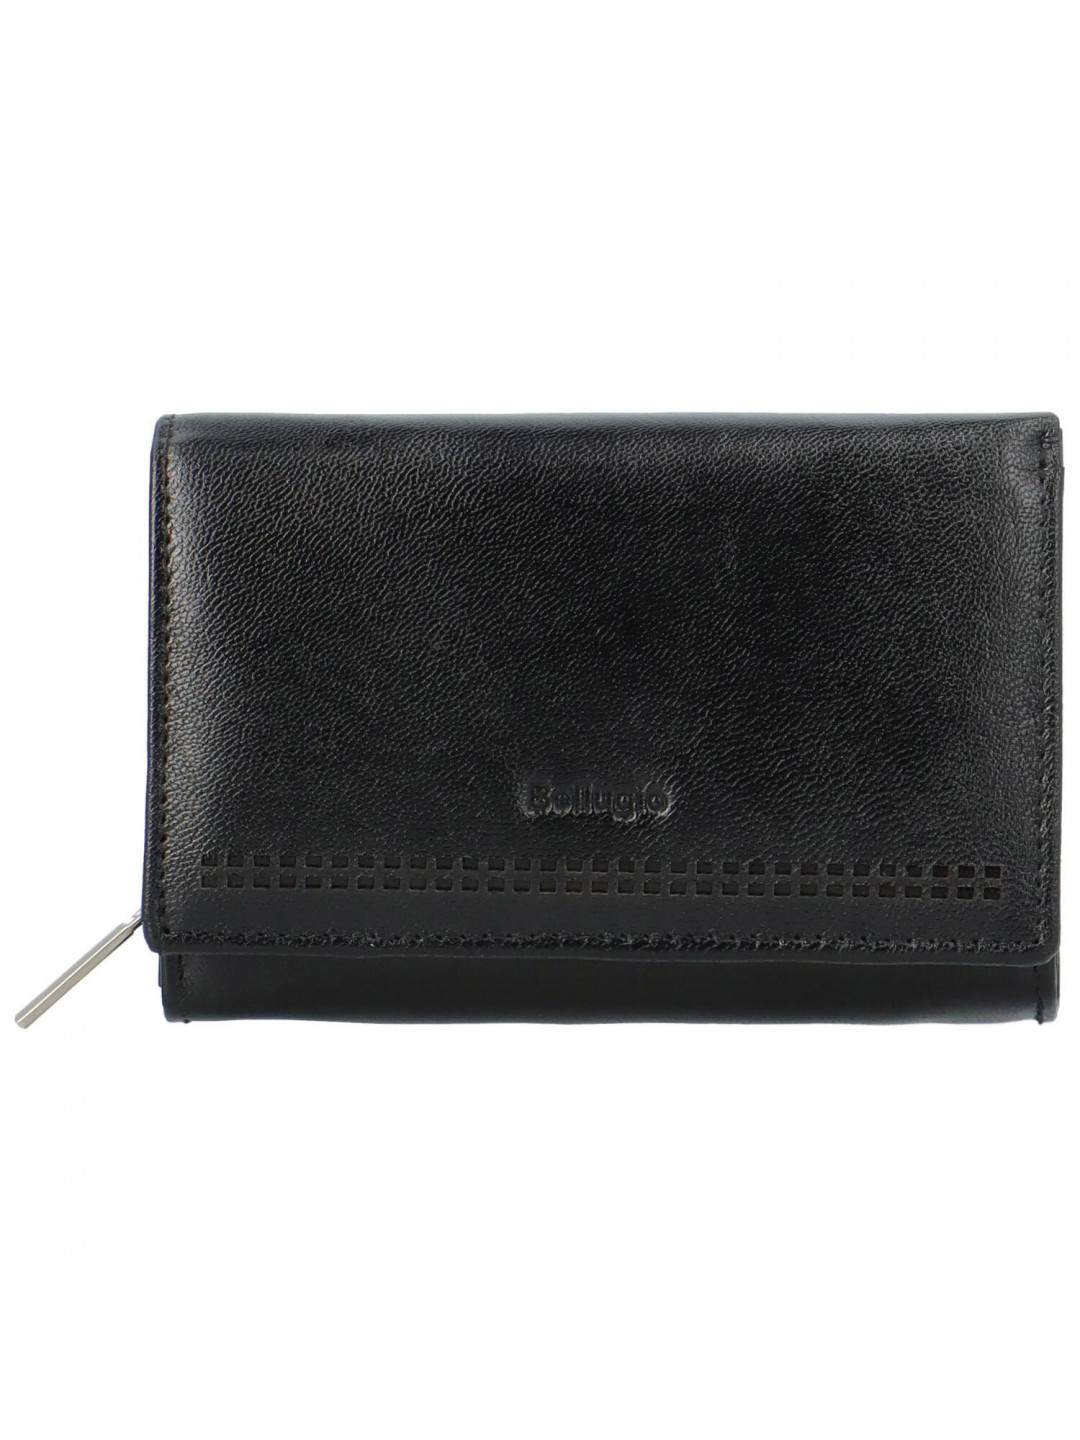 Dámská kožená malá peněženka Bellugio Gialla černá